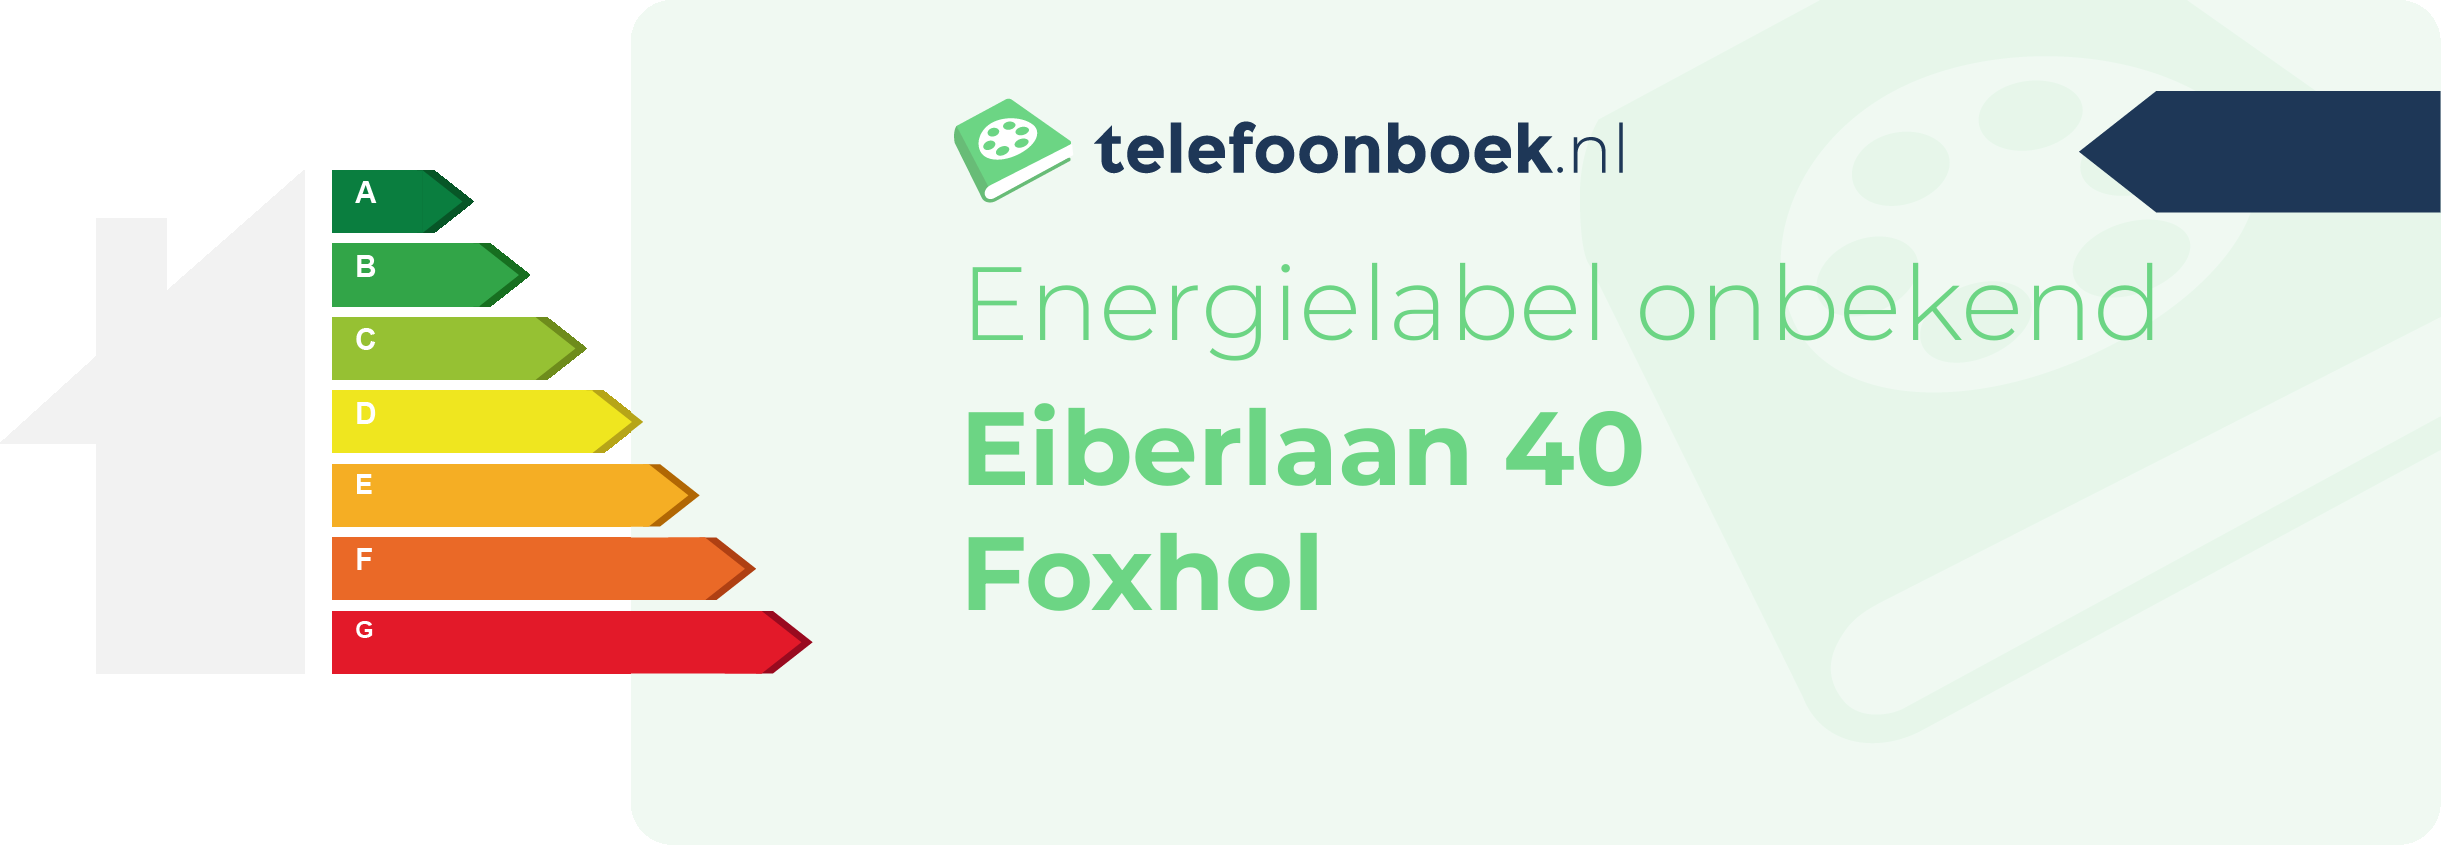 Energielabel Eiberlaan 40 Foxhol